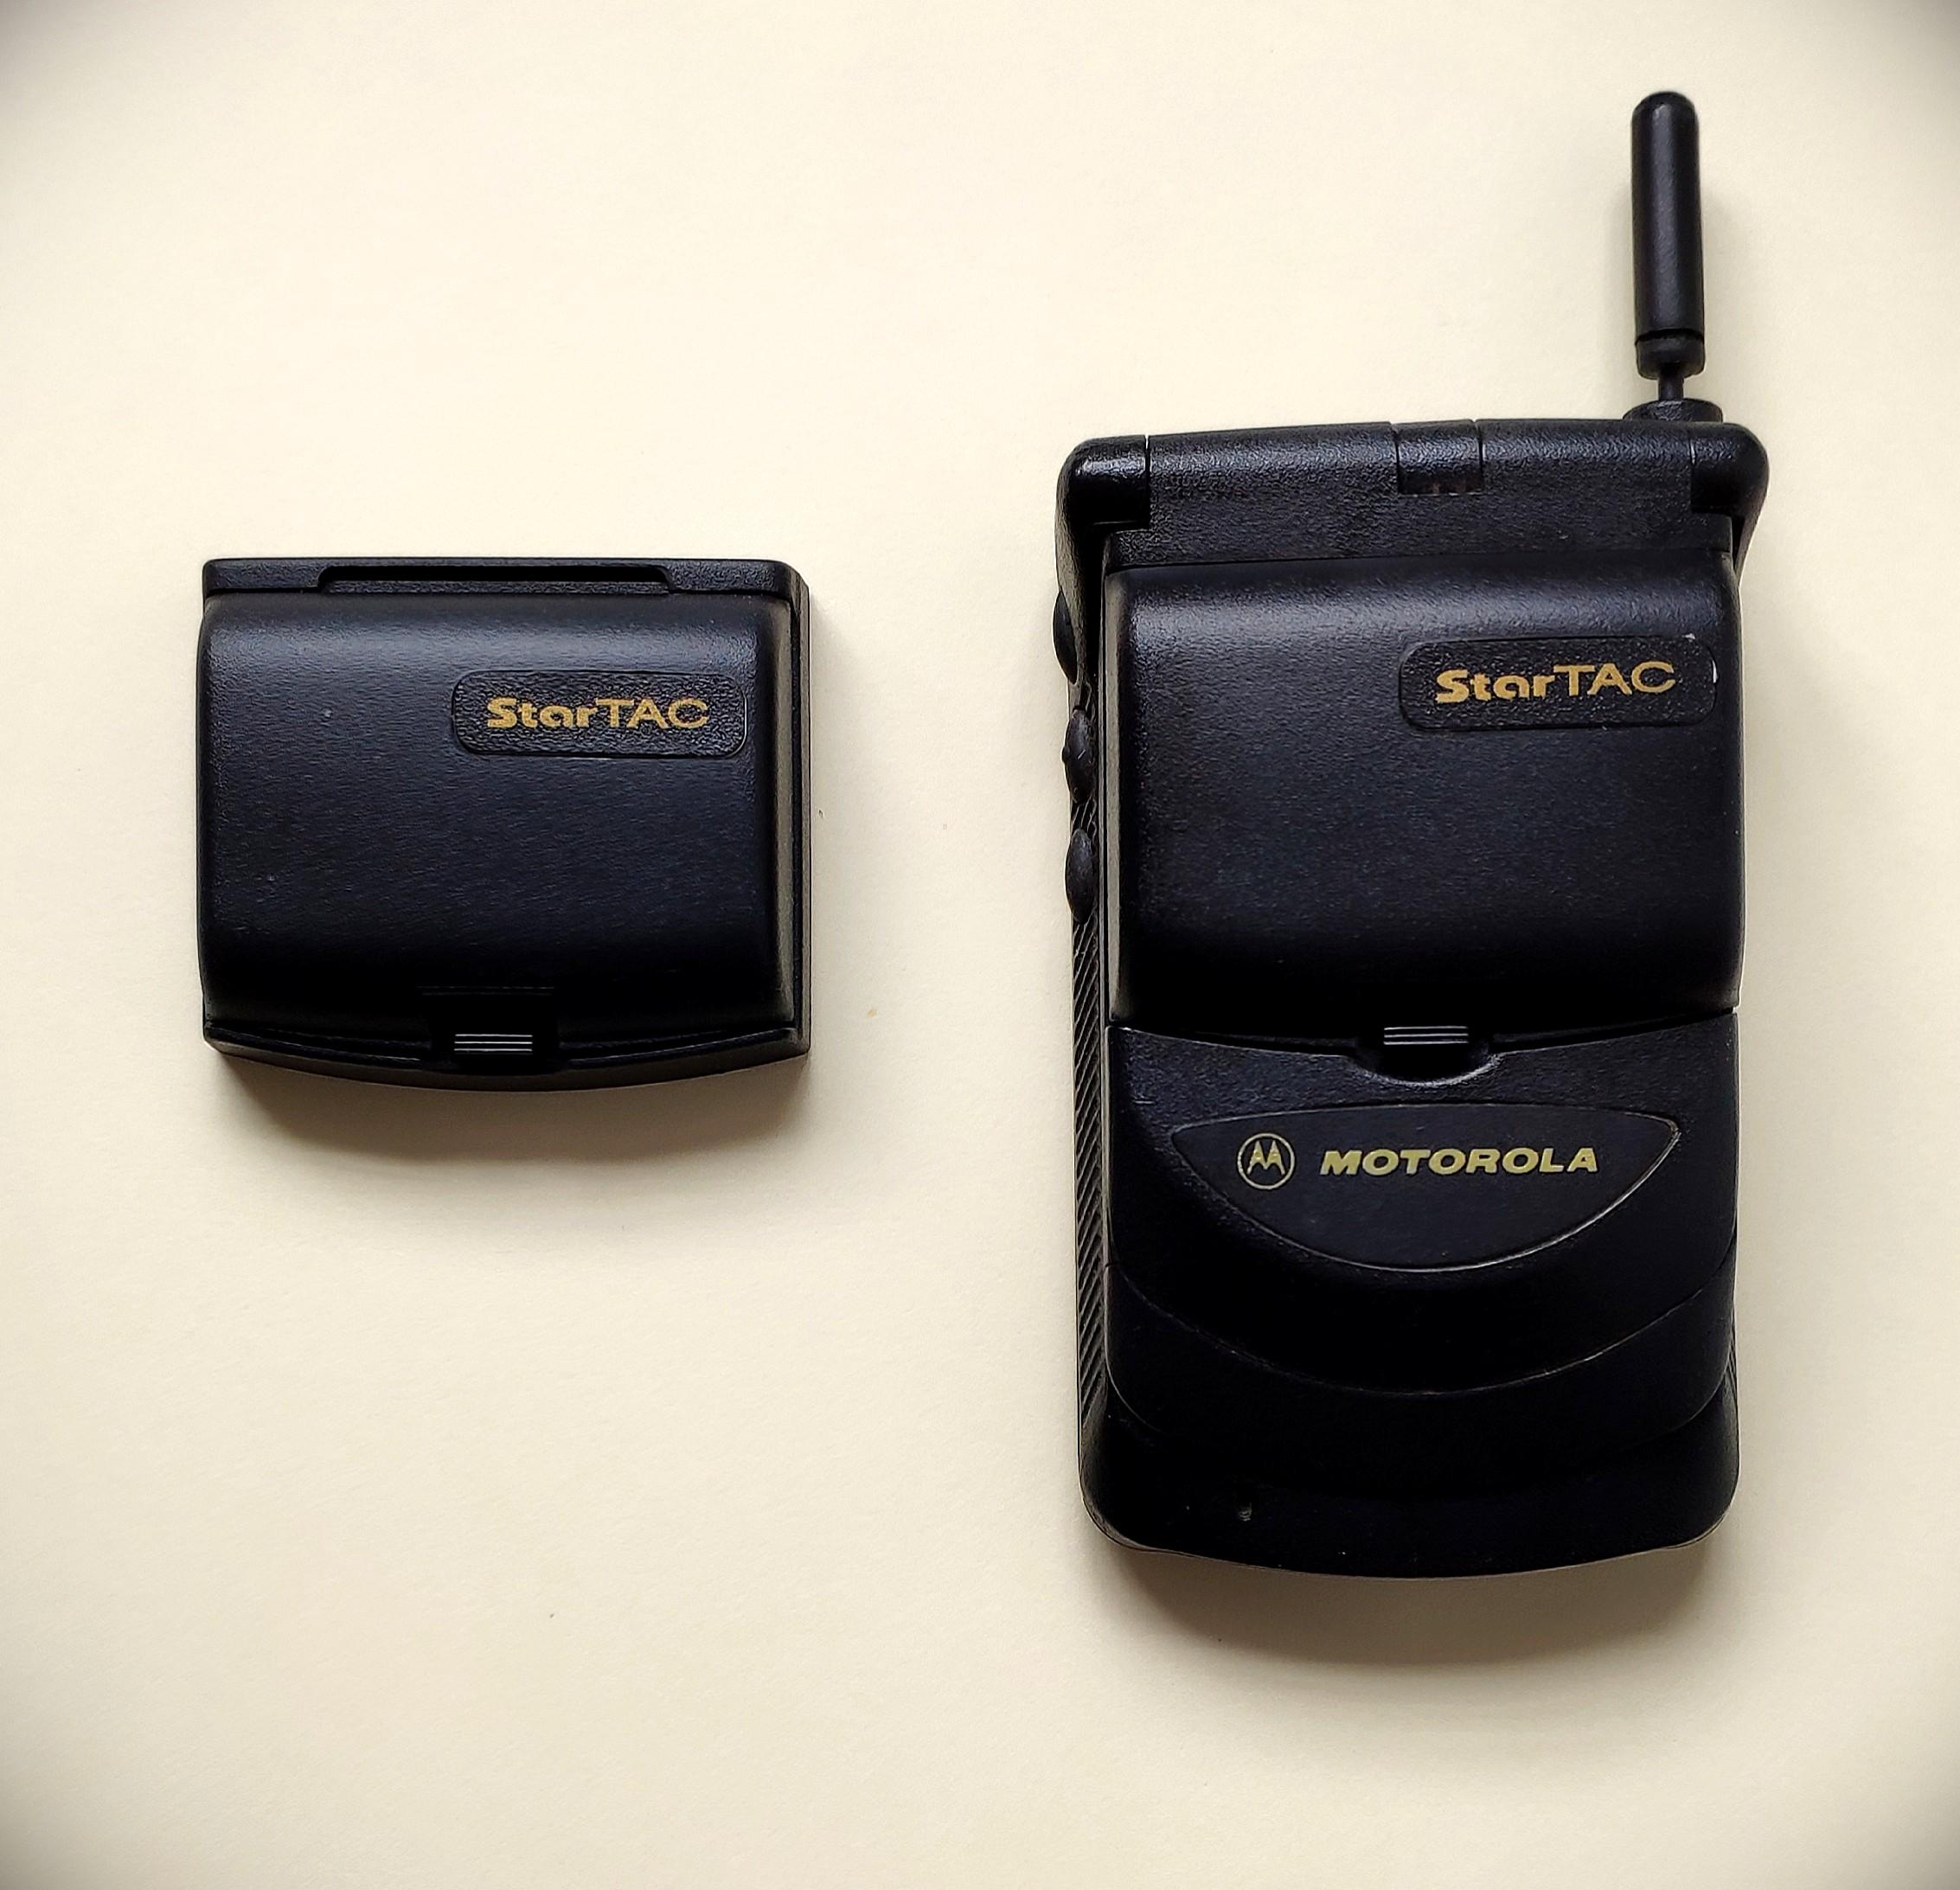 Motorola社製 StarTAC コレクション品 1997年製 - スマートフォン/携帯電話